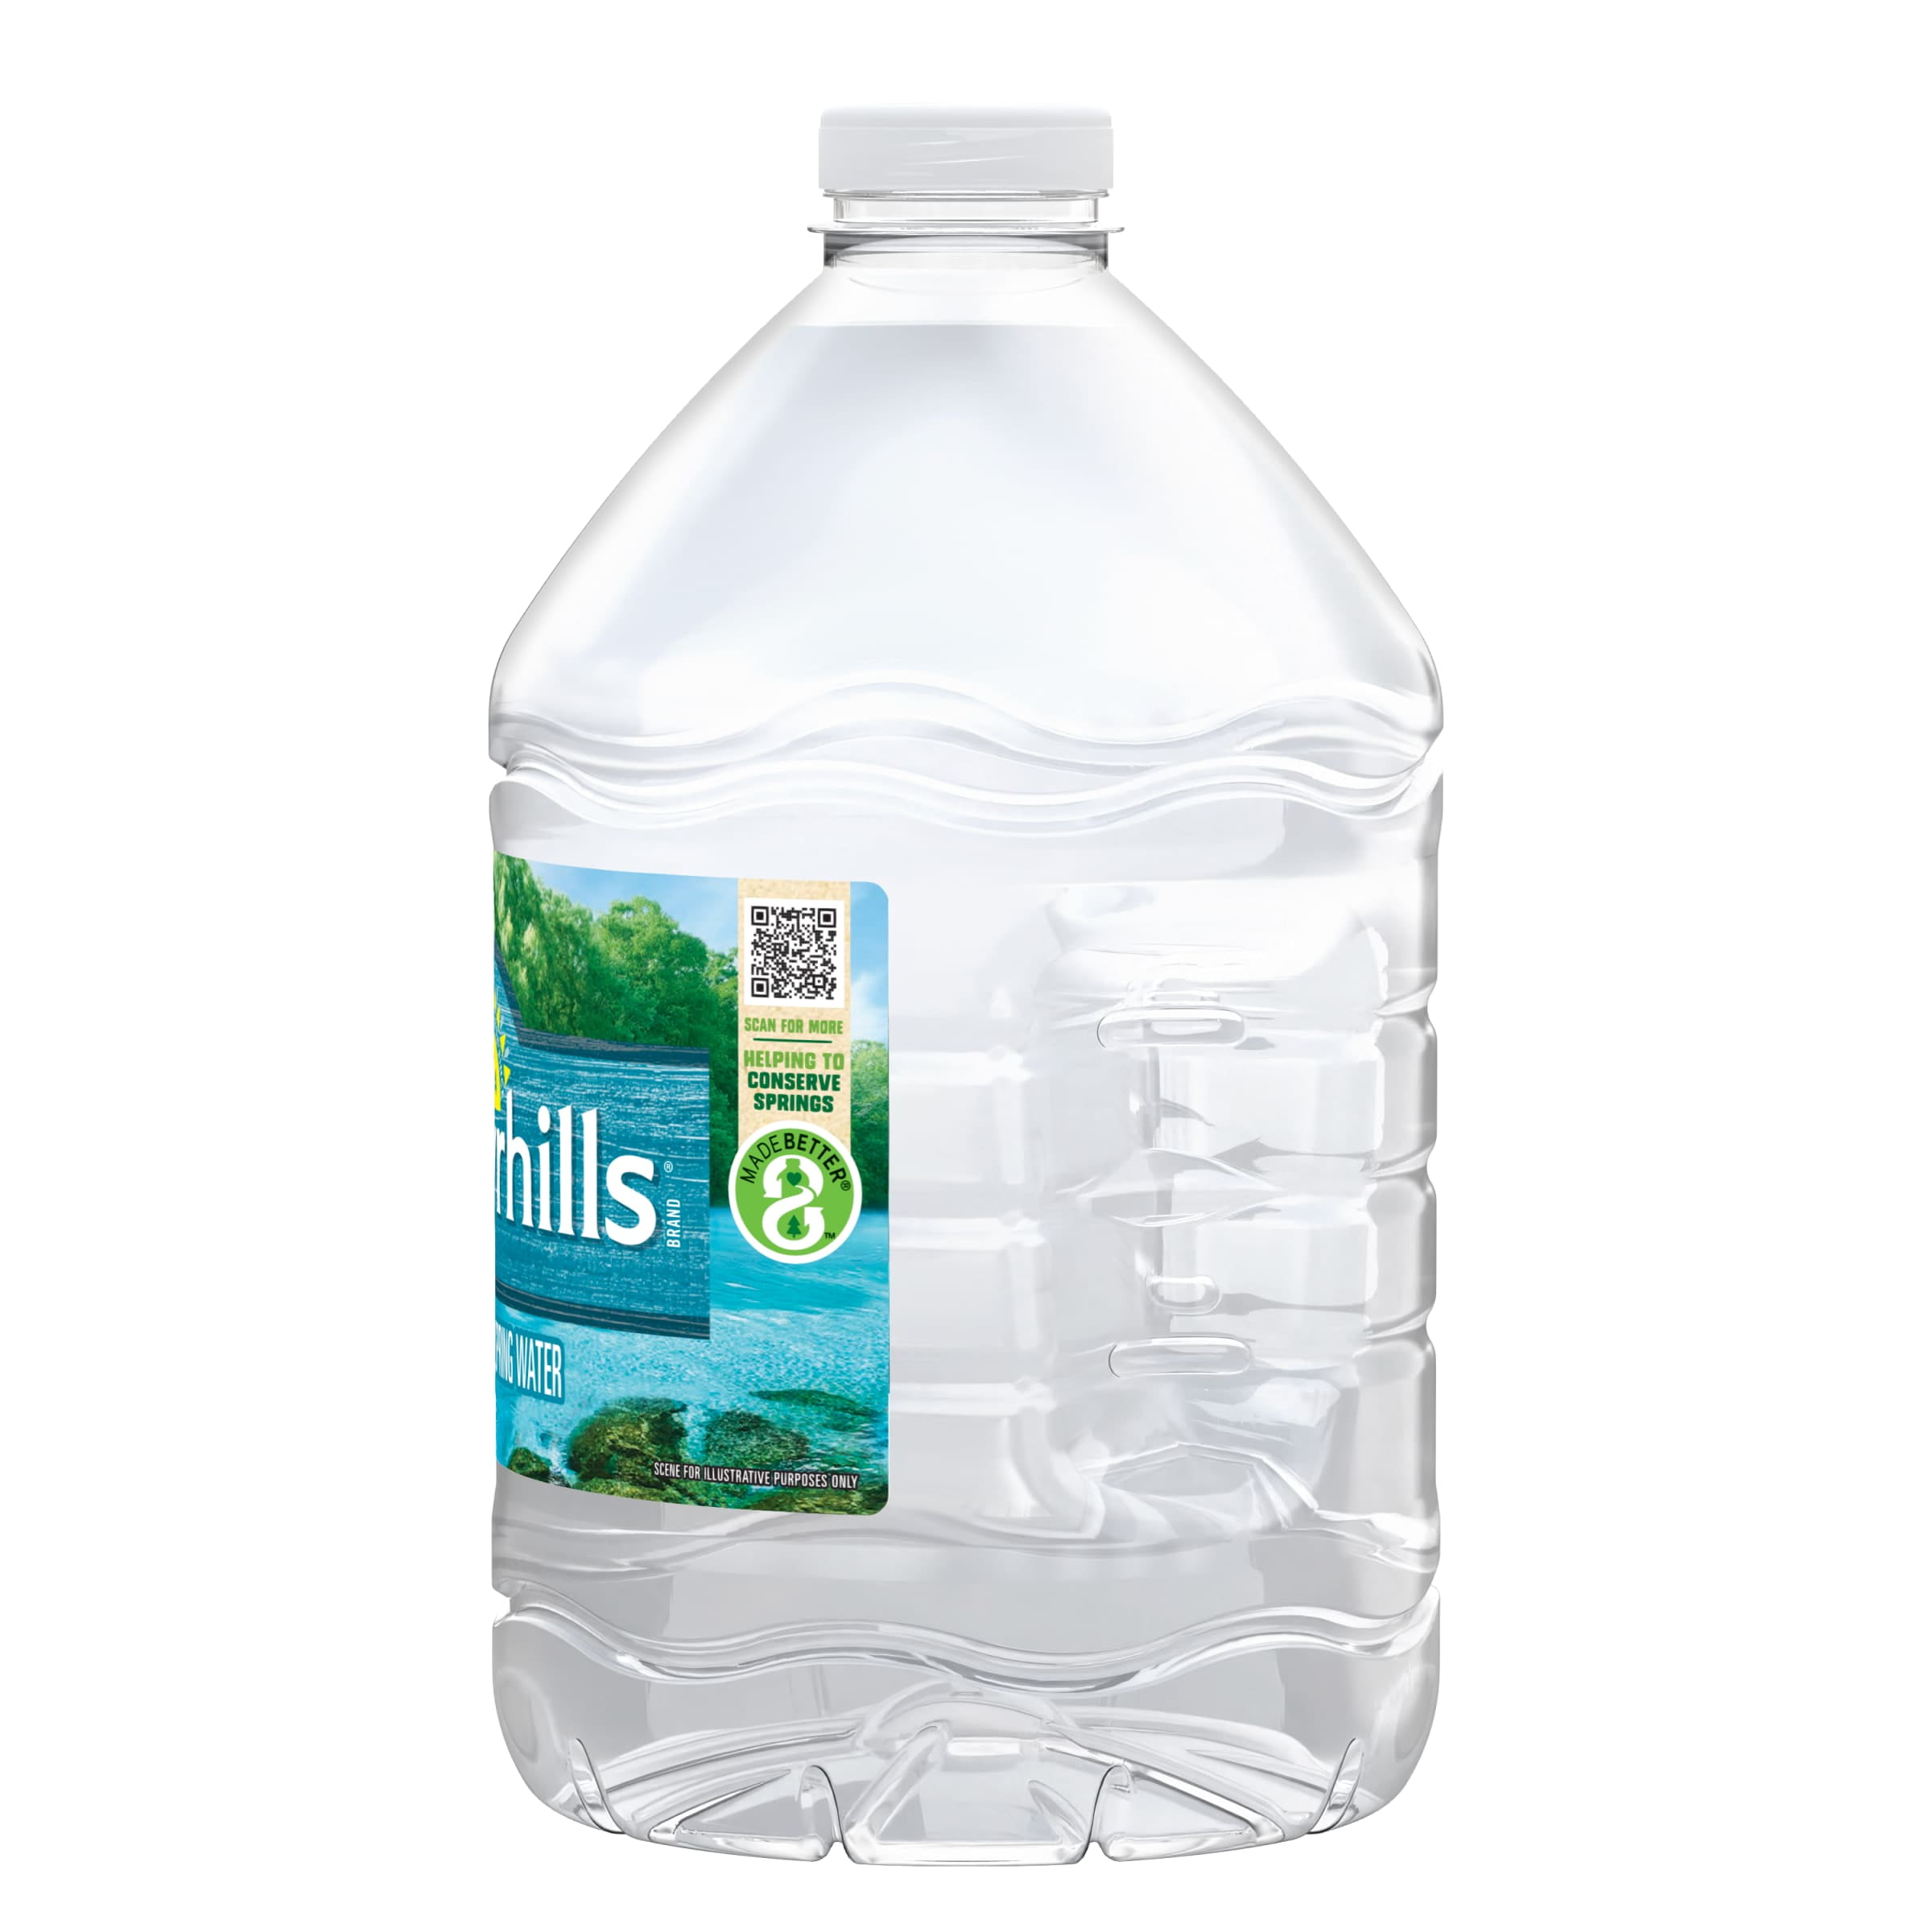 8 Ounce Bottled Spring Water  Zephyrhills® Brand 100% Mountain Spring Water